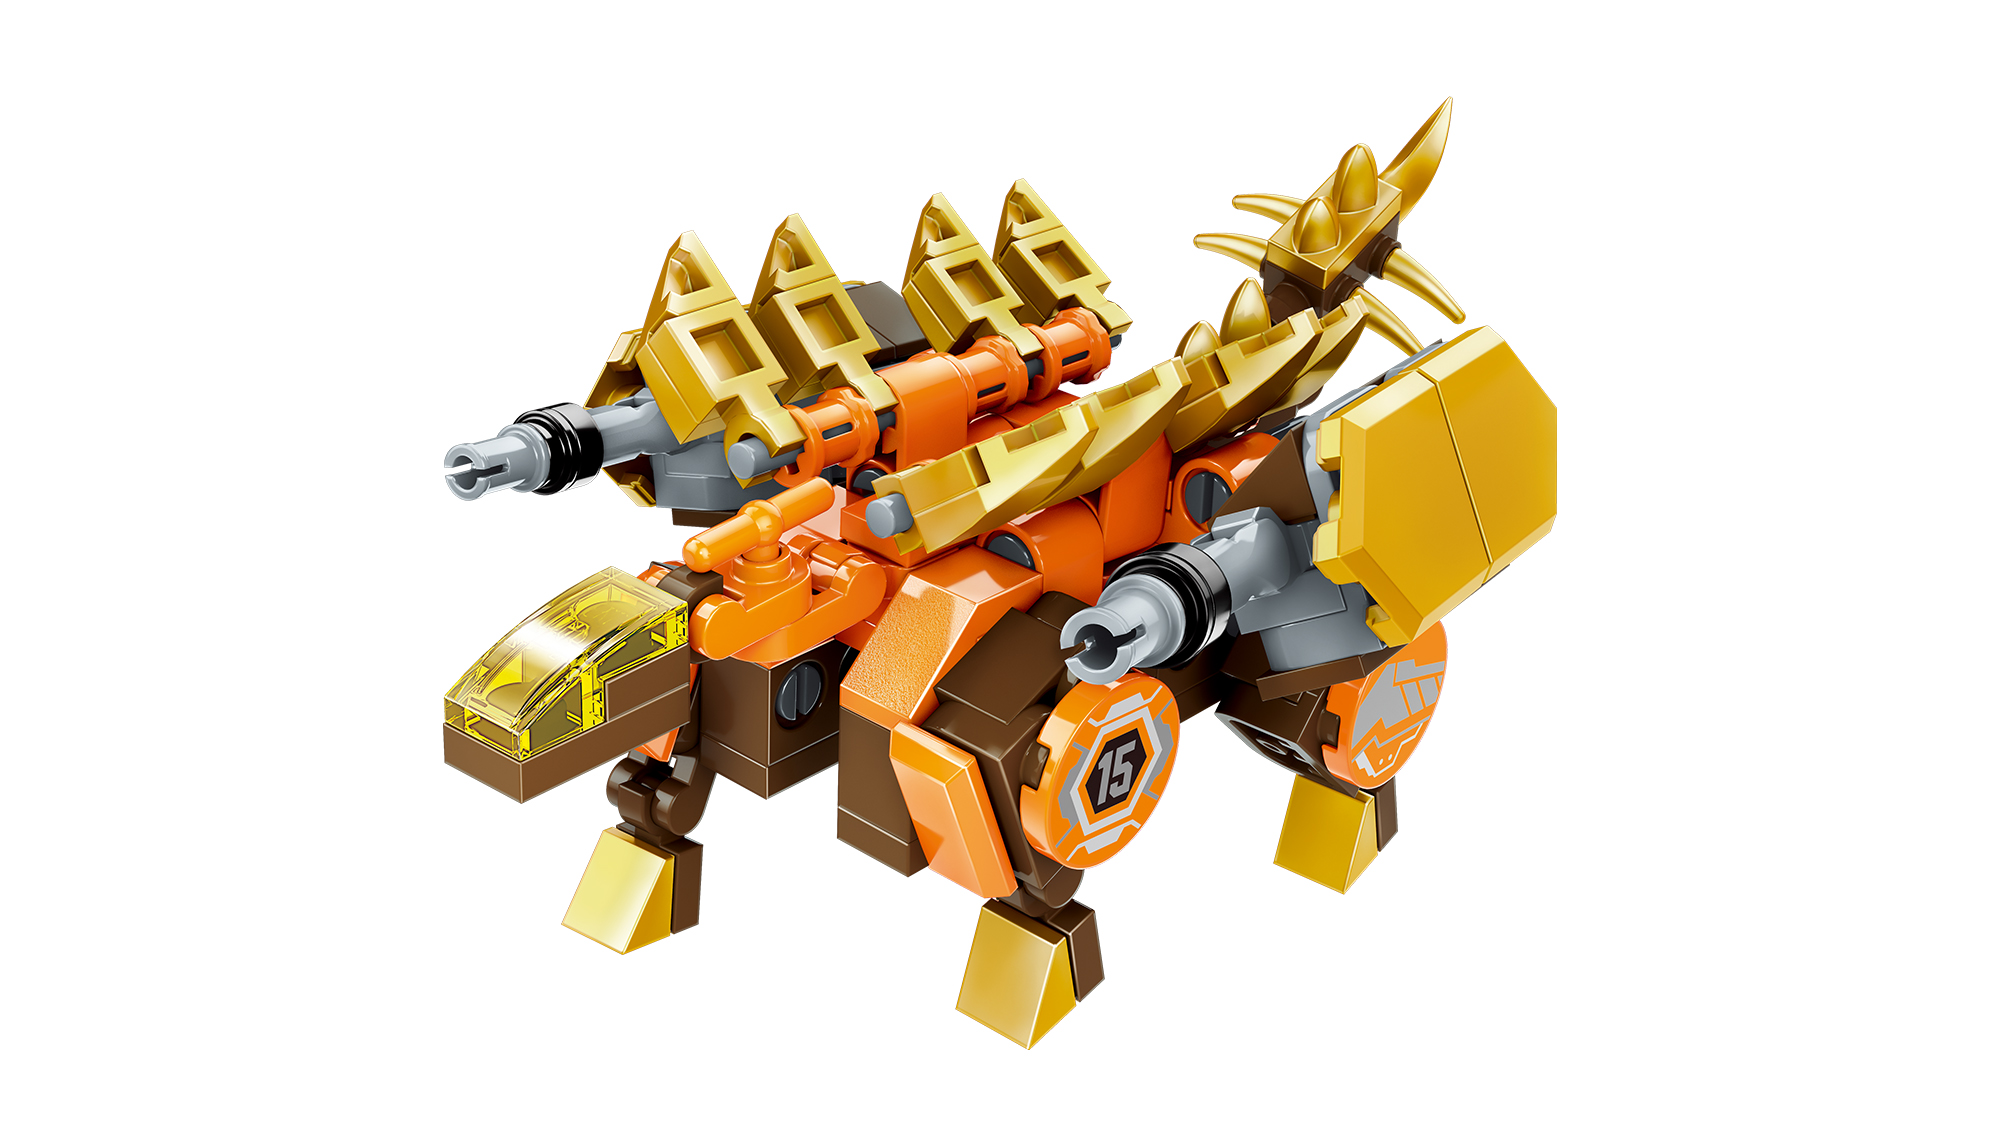 Steel-spine Stegosaurus